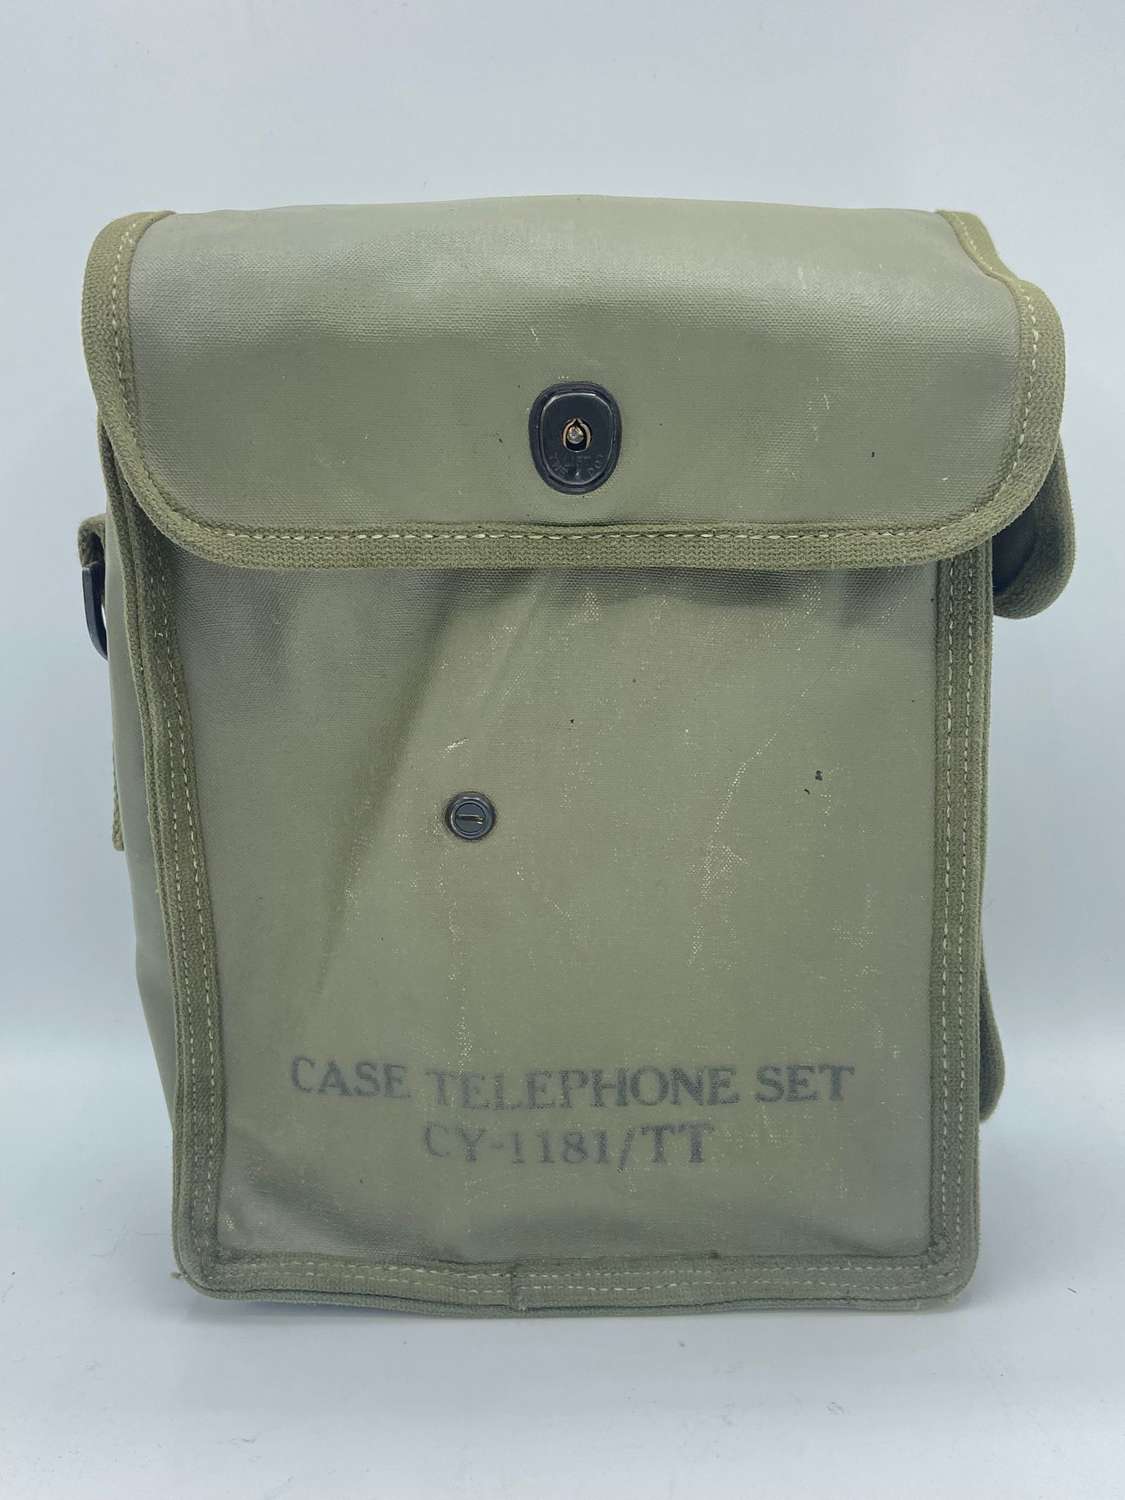 Vintage US Army Field Telephone Radio Set, Phone & Case CY-1181/TT